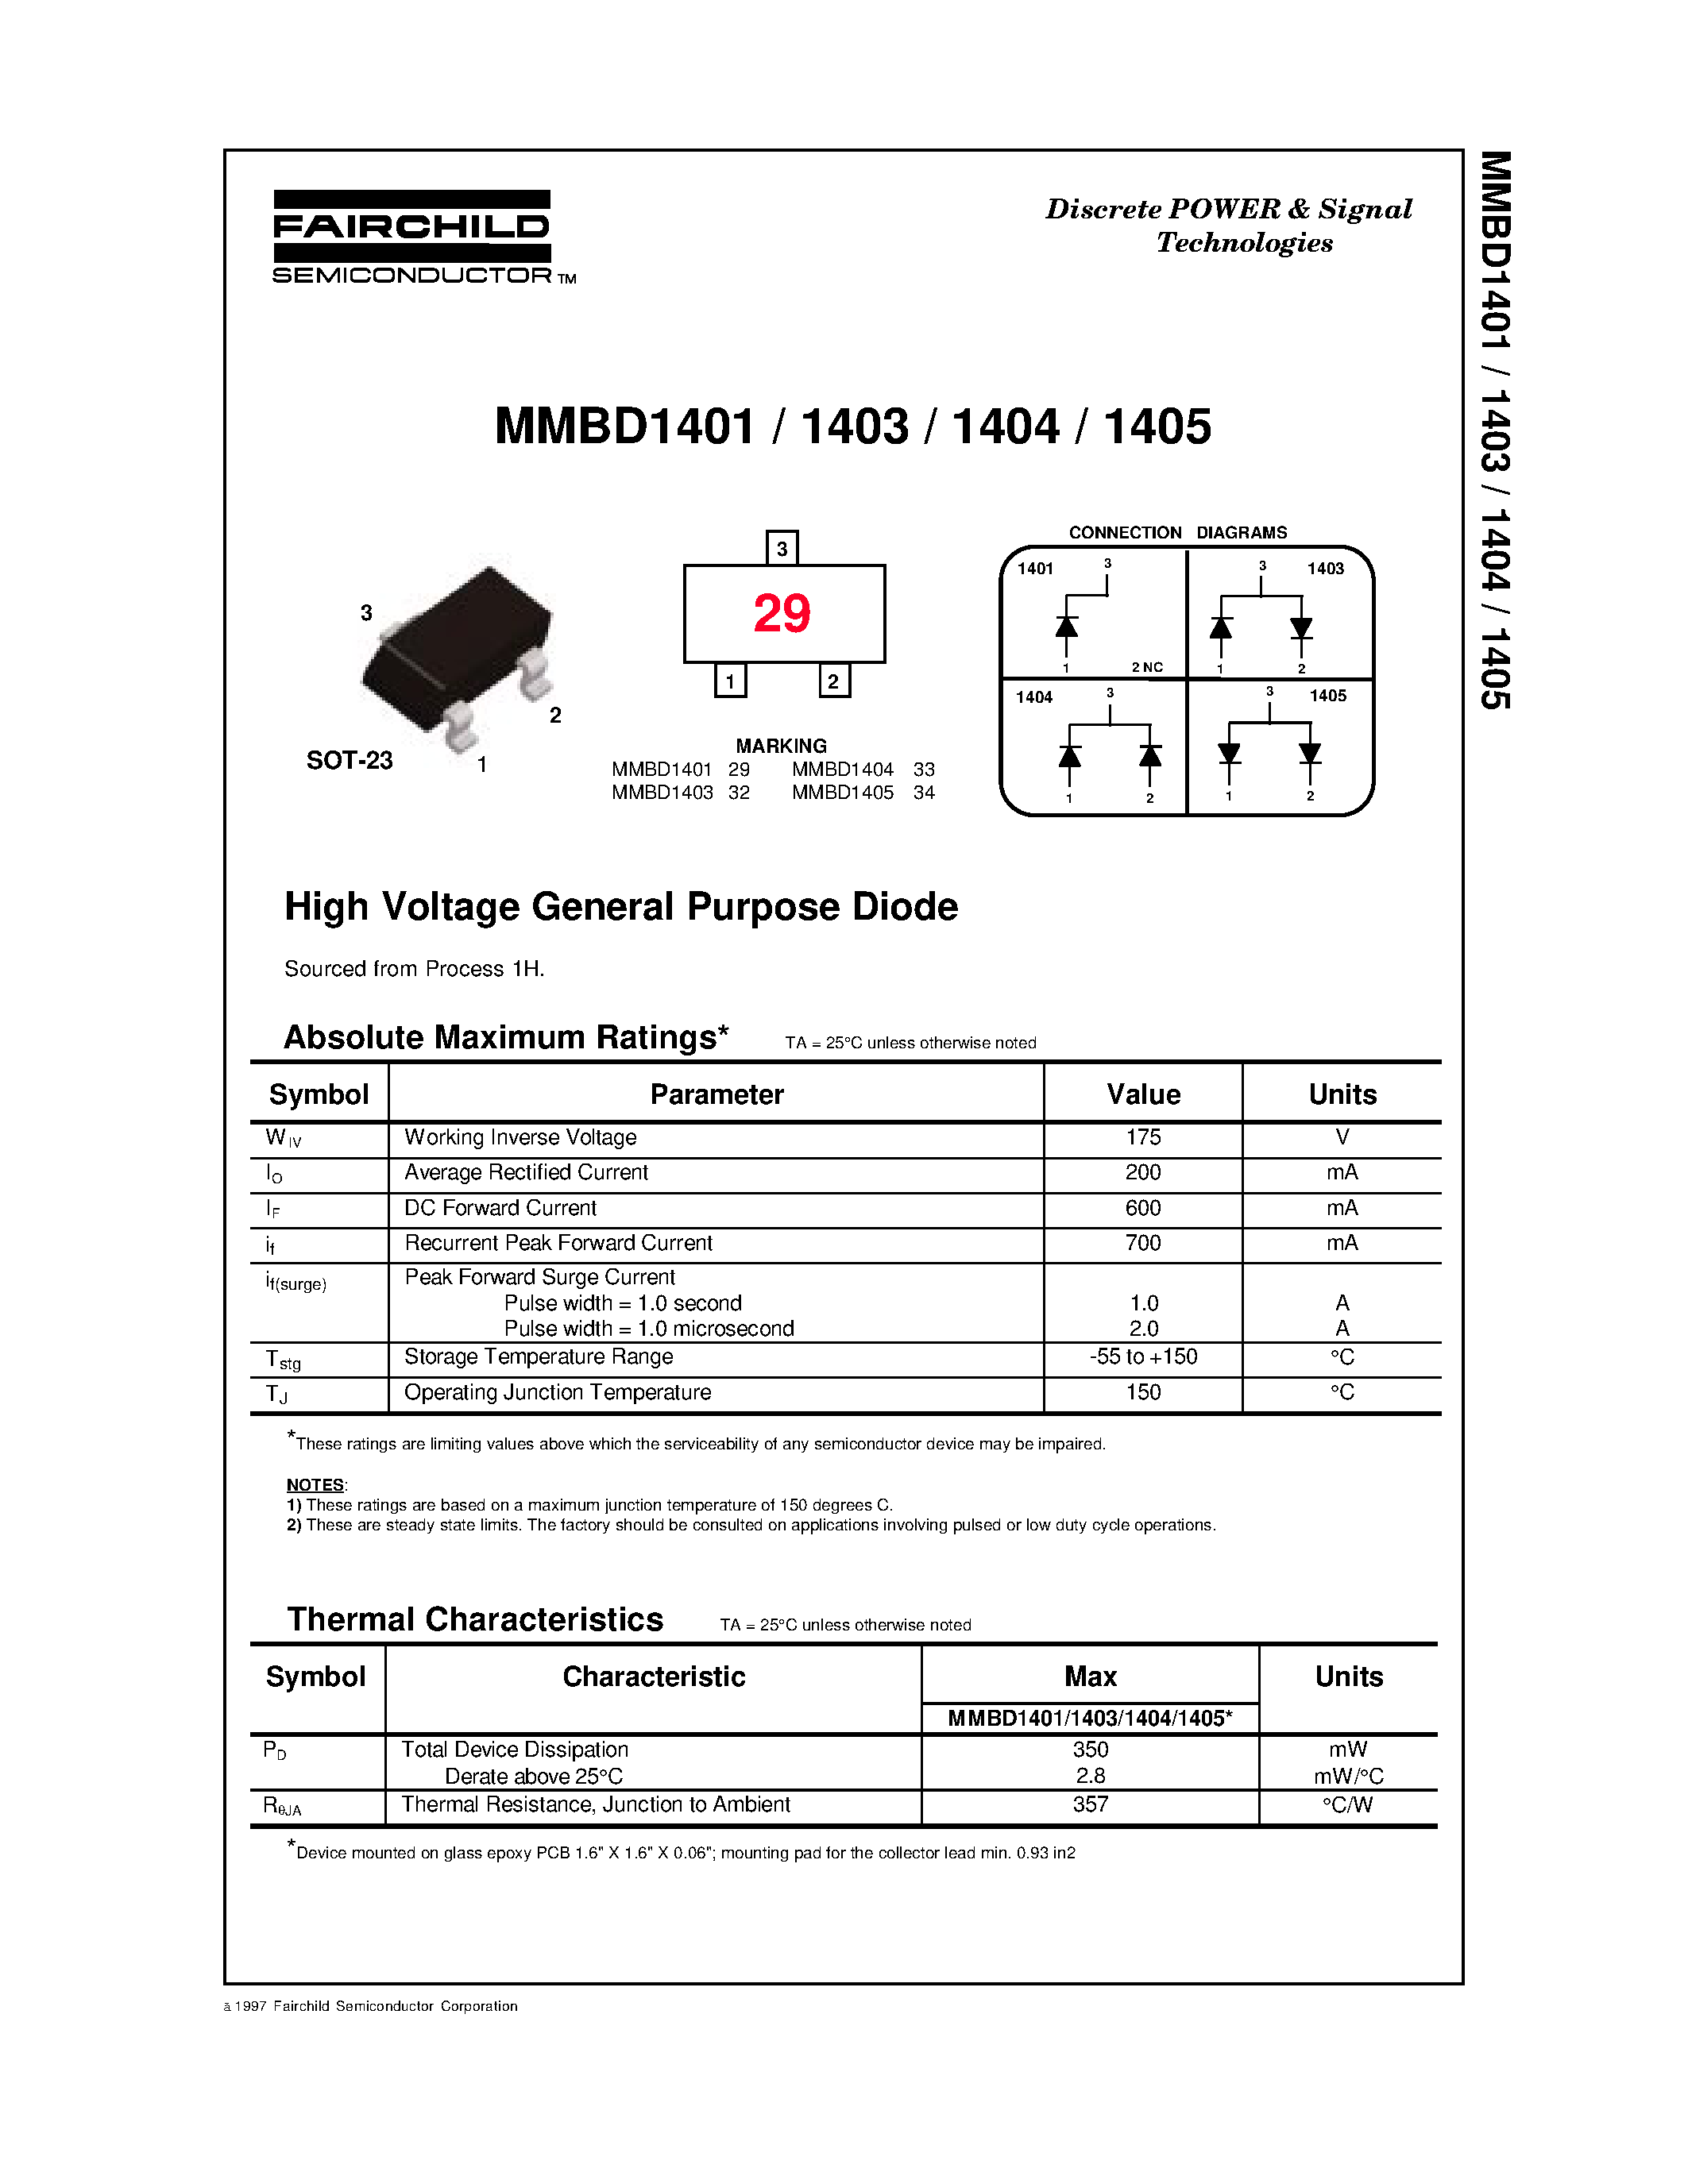 Datasheet MMBD1404 - High Voltage General Purpose Diode page 1